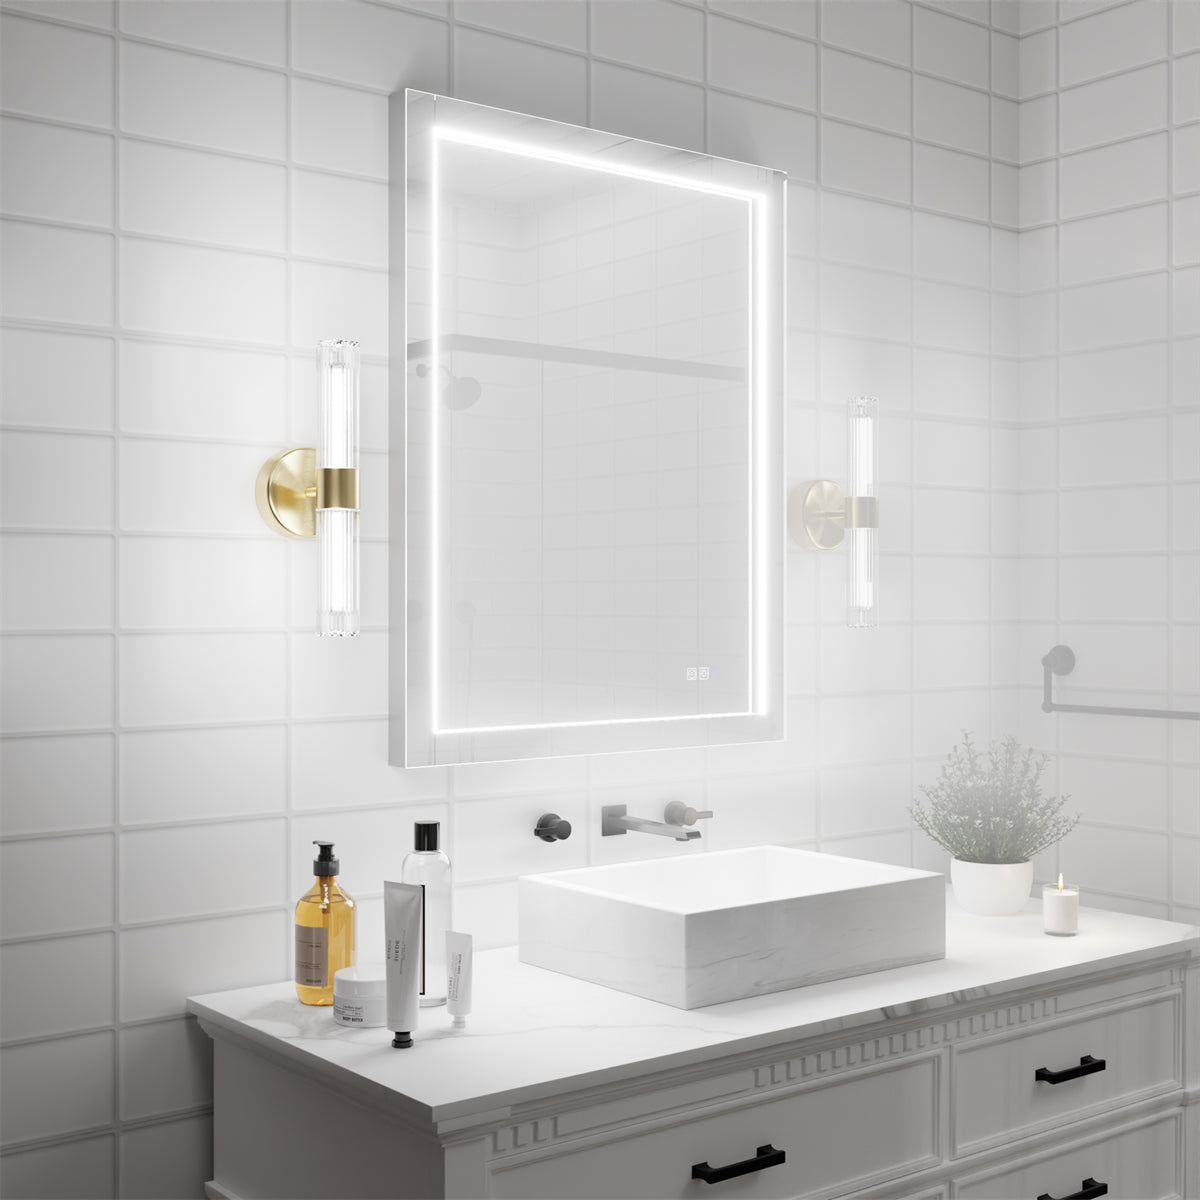 Ascend-M1d 28" x 36" Led Bathroom Mirror with Aluminum Frame